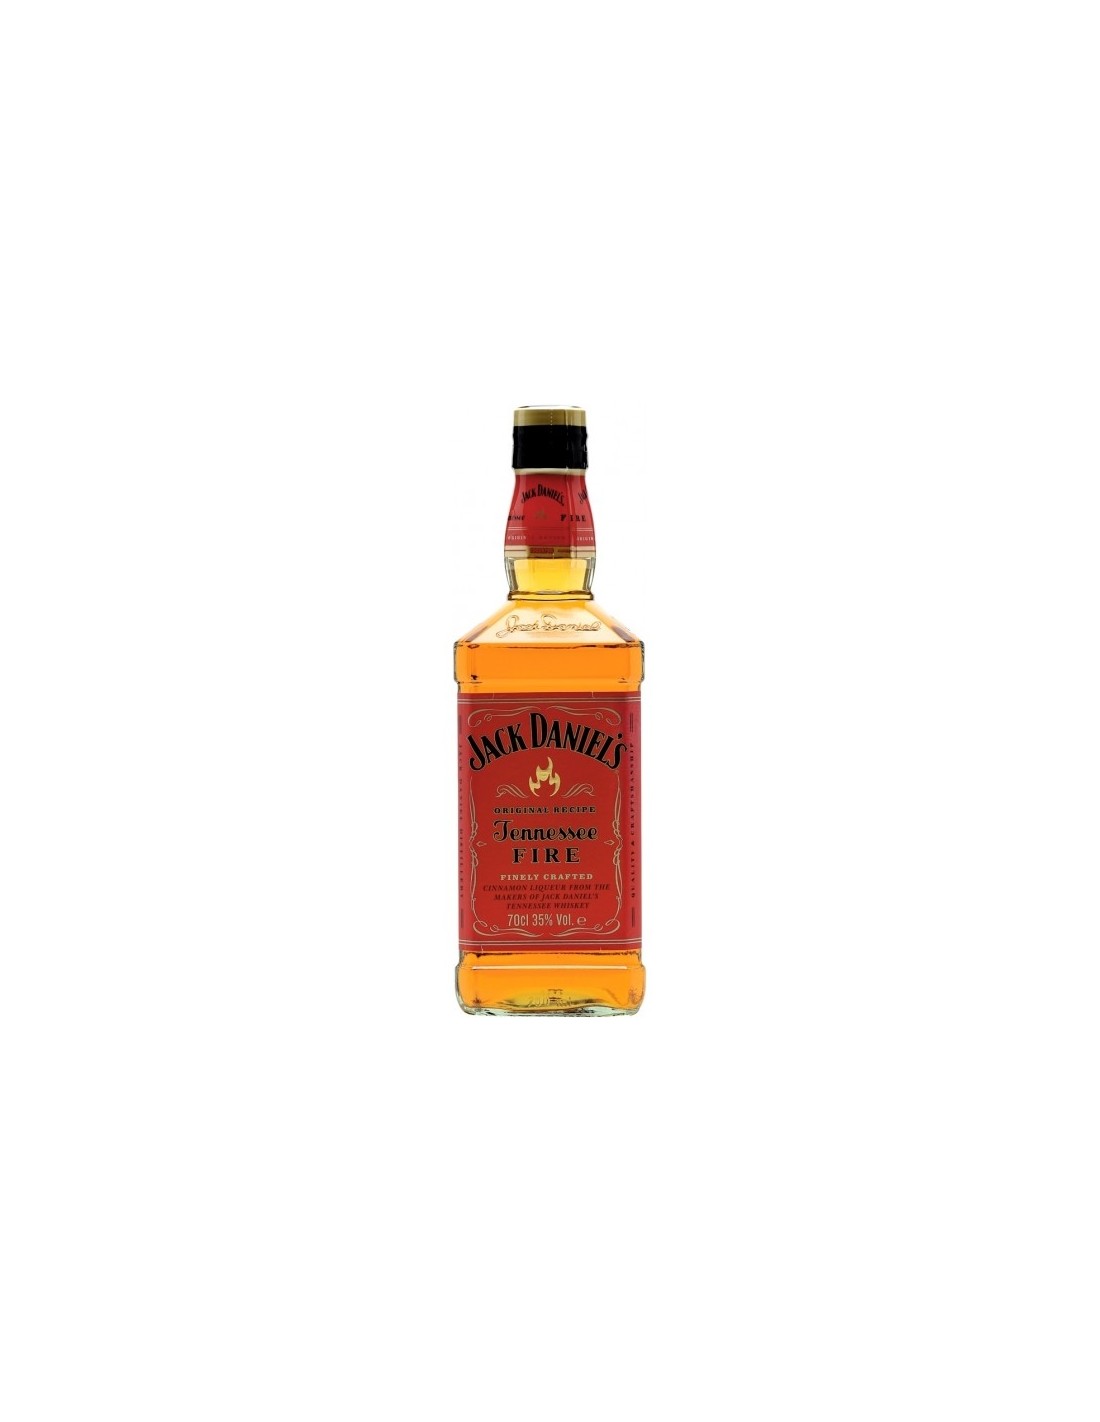 Whisky Jack Daniel’s Fire, 0.7L, 35% alc., SUA alcooldiscount.ro